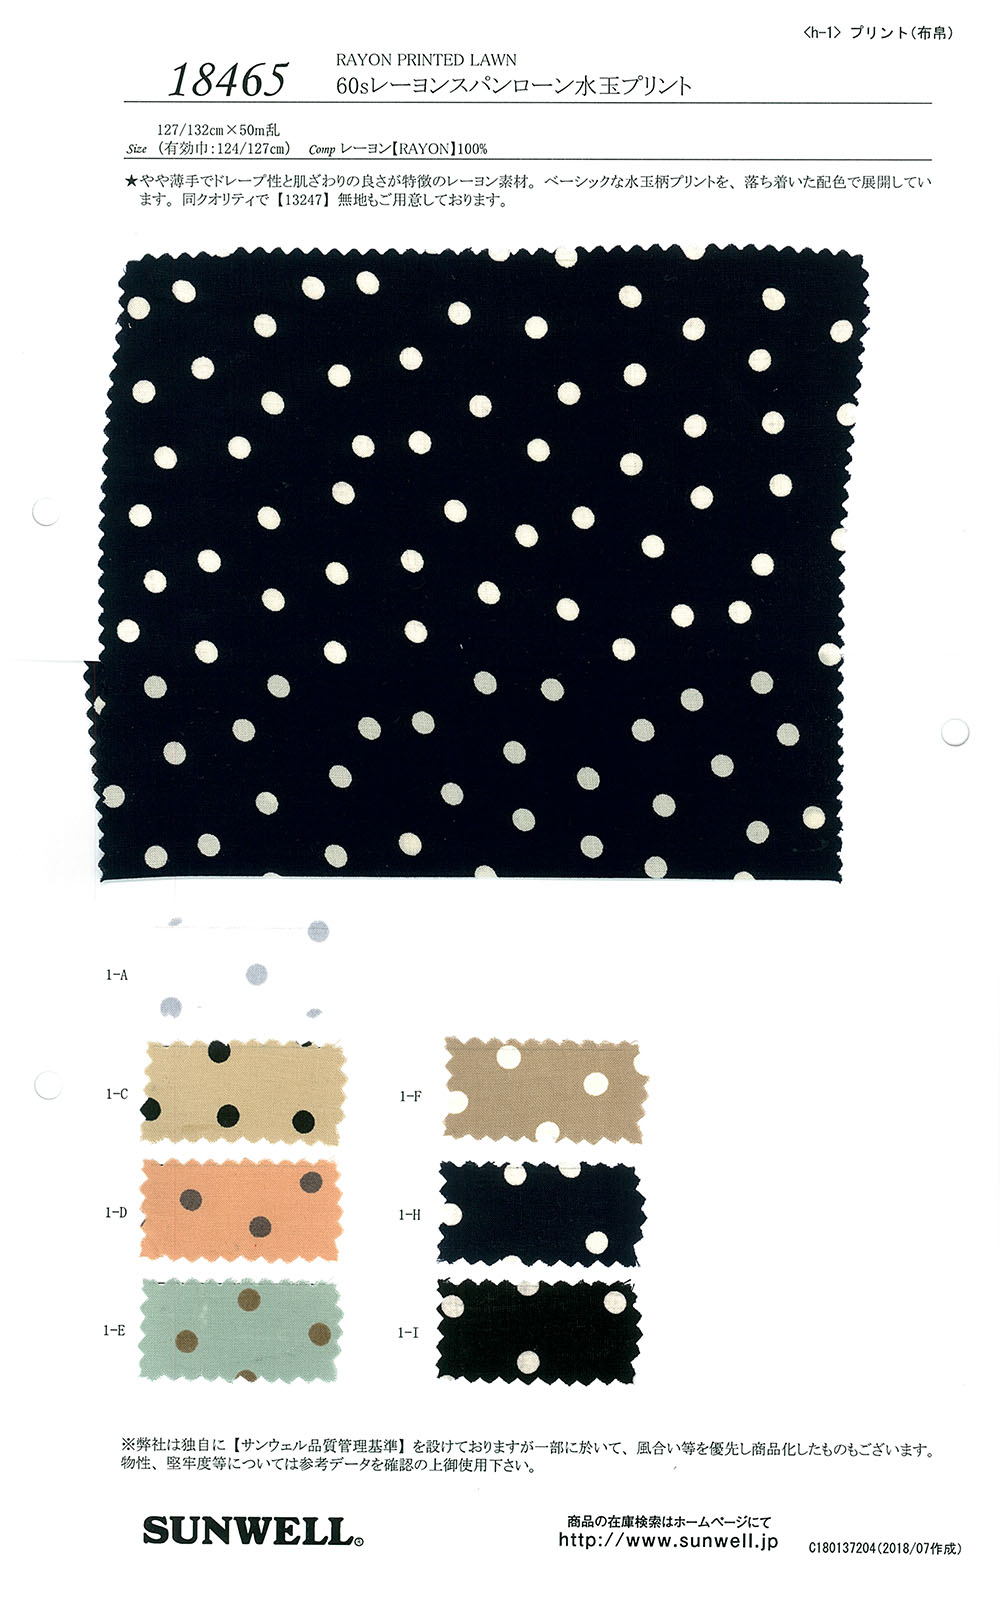 18465 60 Fäden Rayon Spun Lawn Polka Dot Print[Textilgewebe] SUNWELL